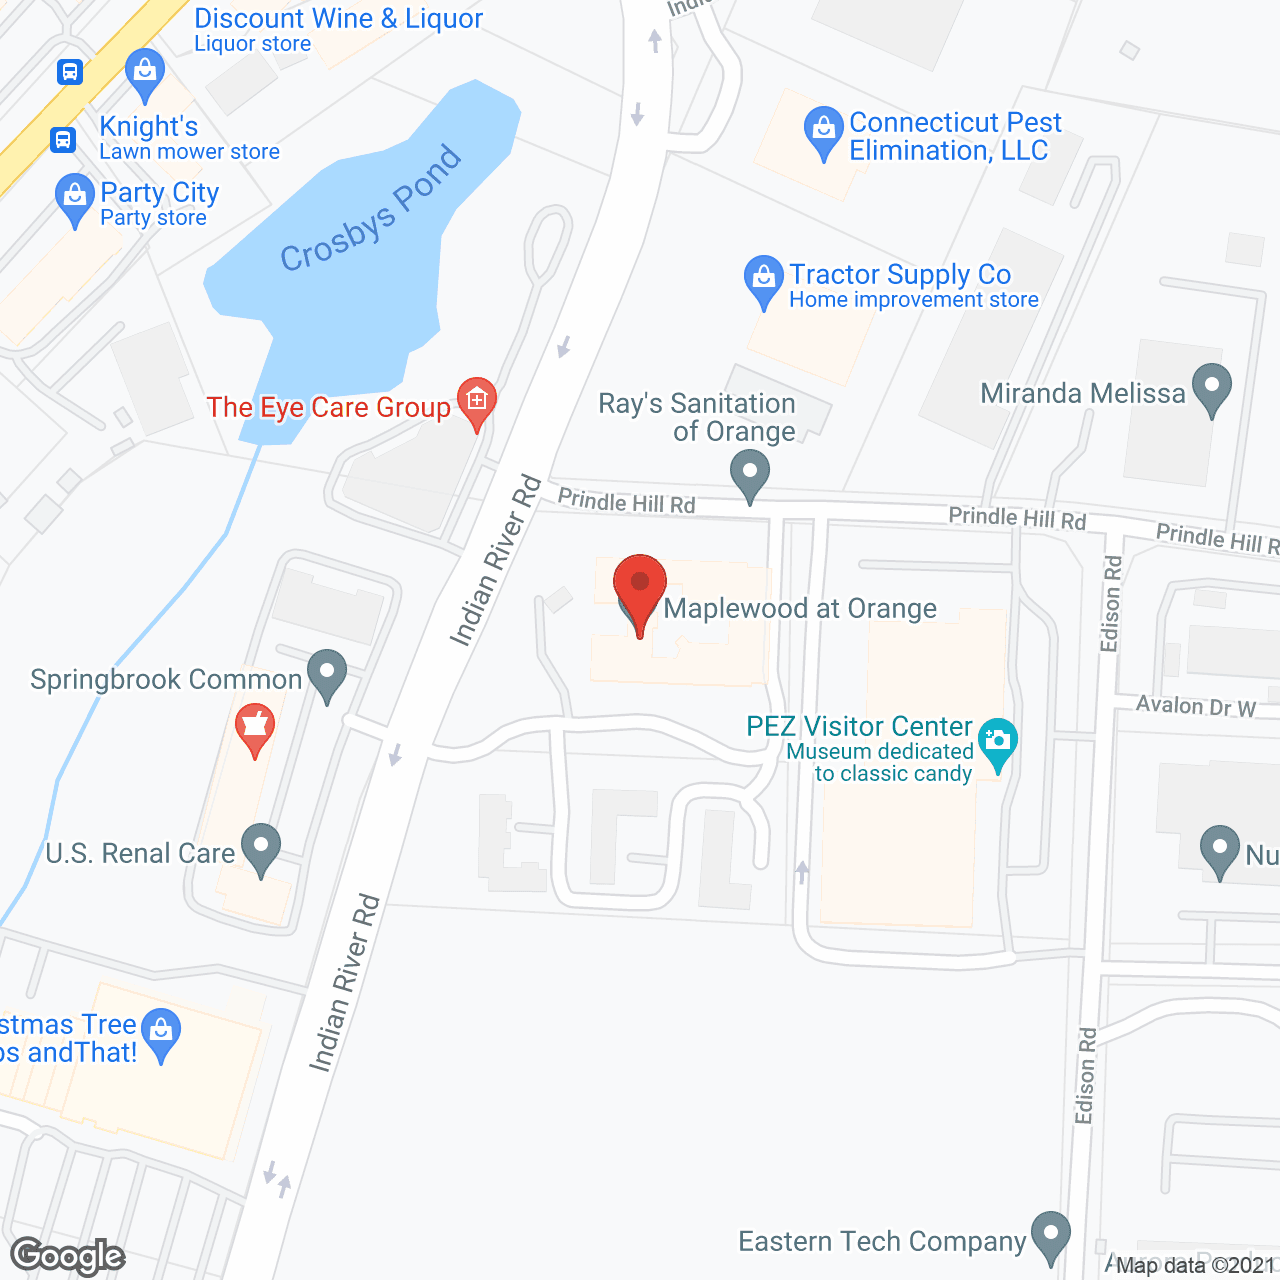 Maplewood at Orange in google map